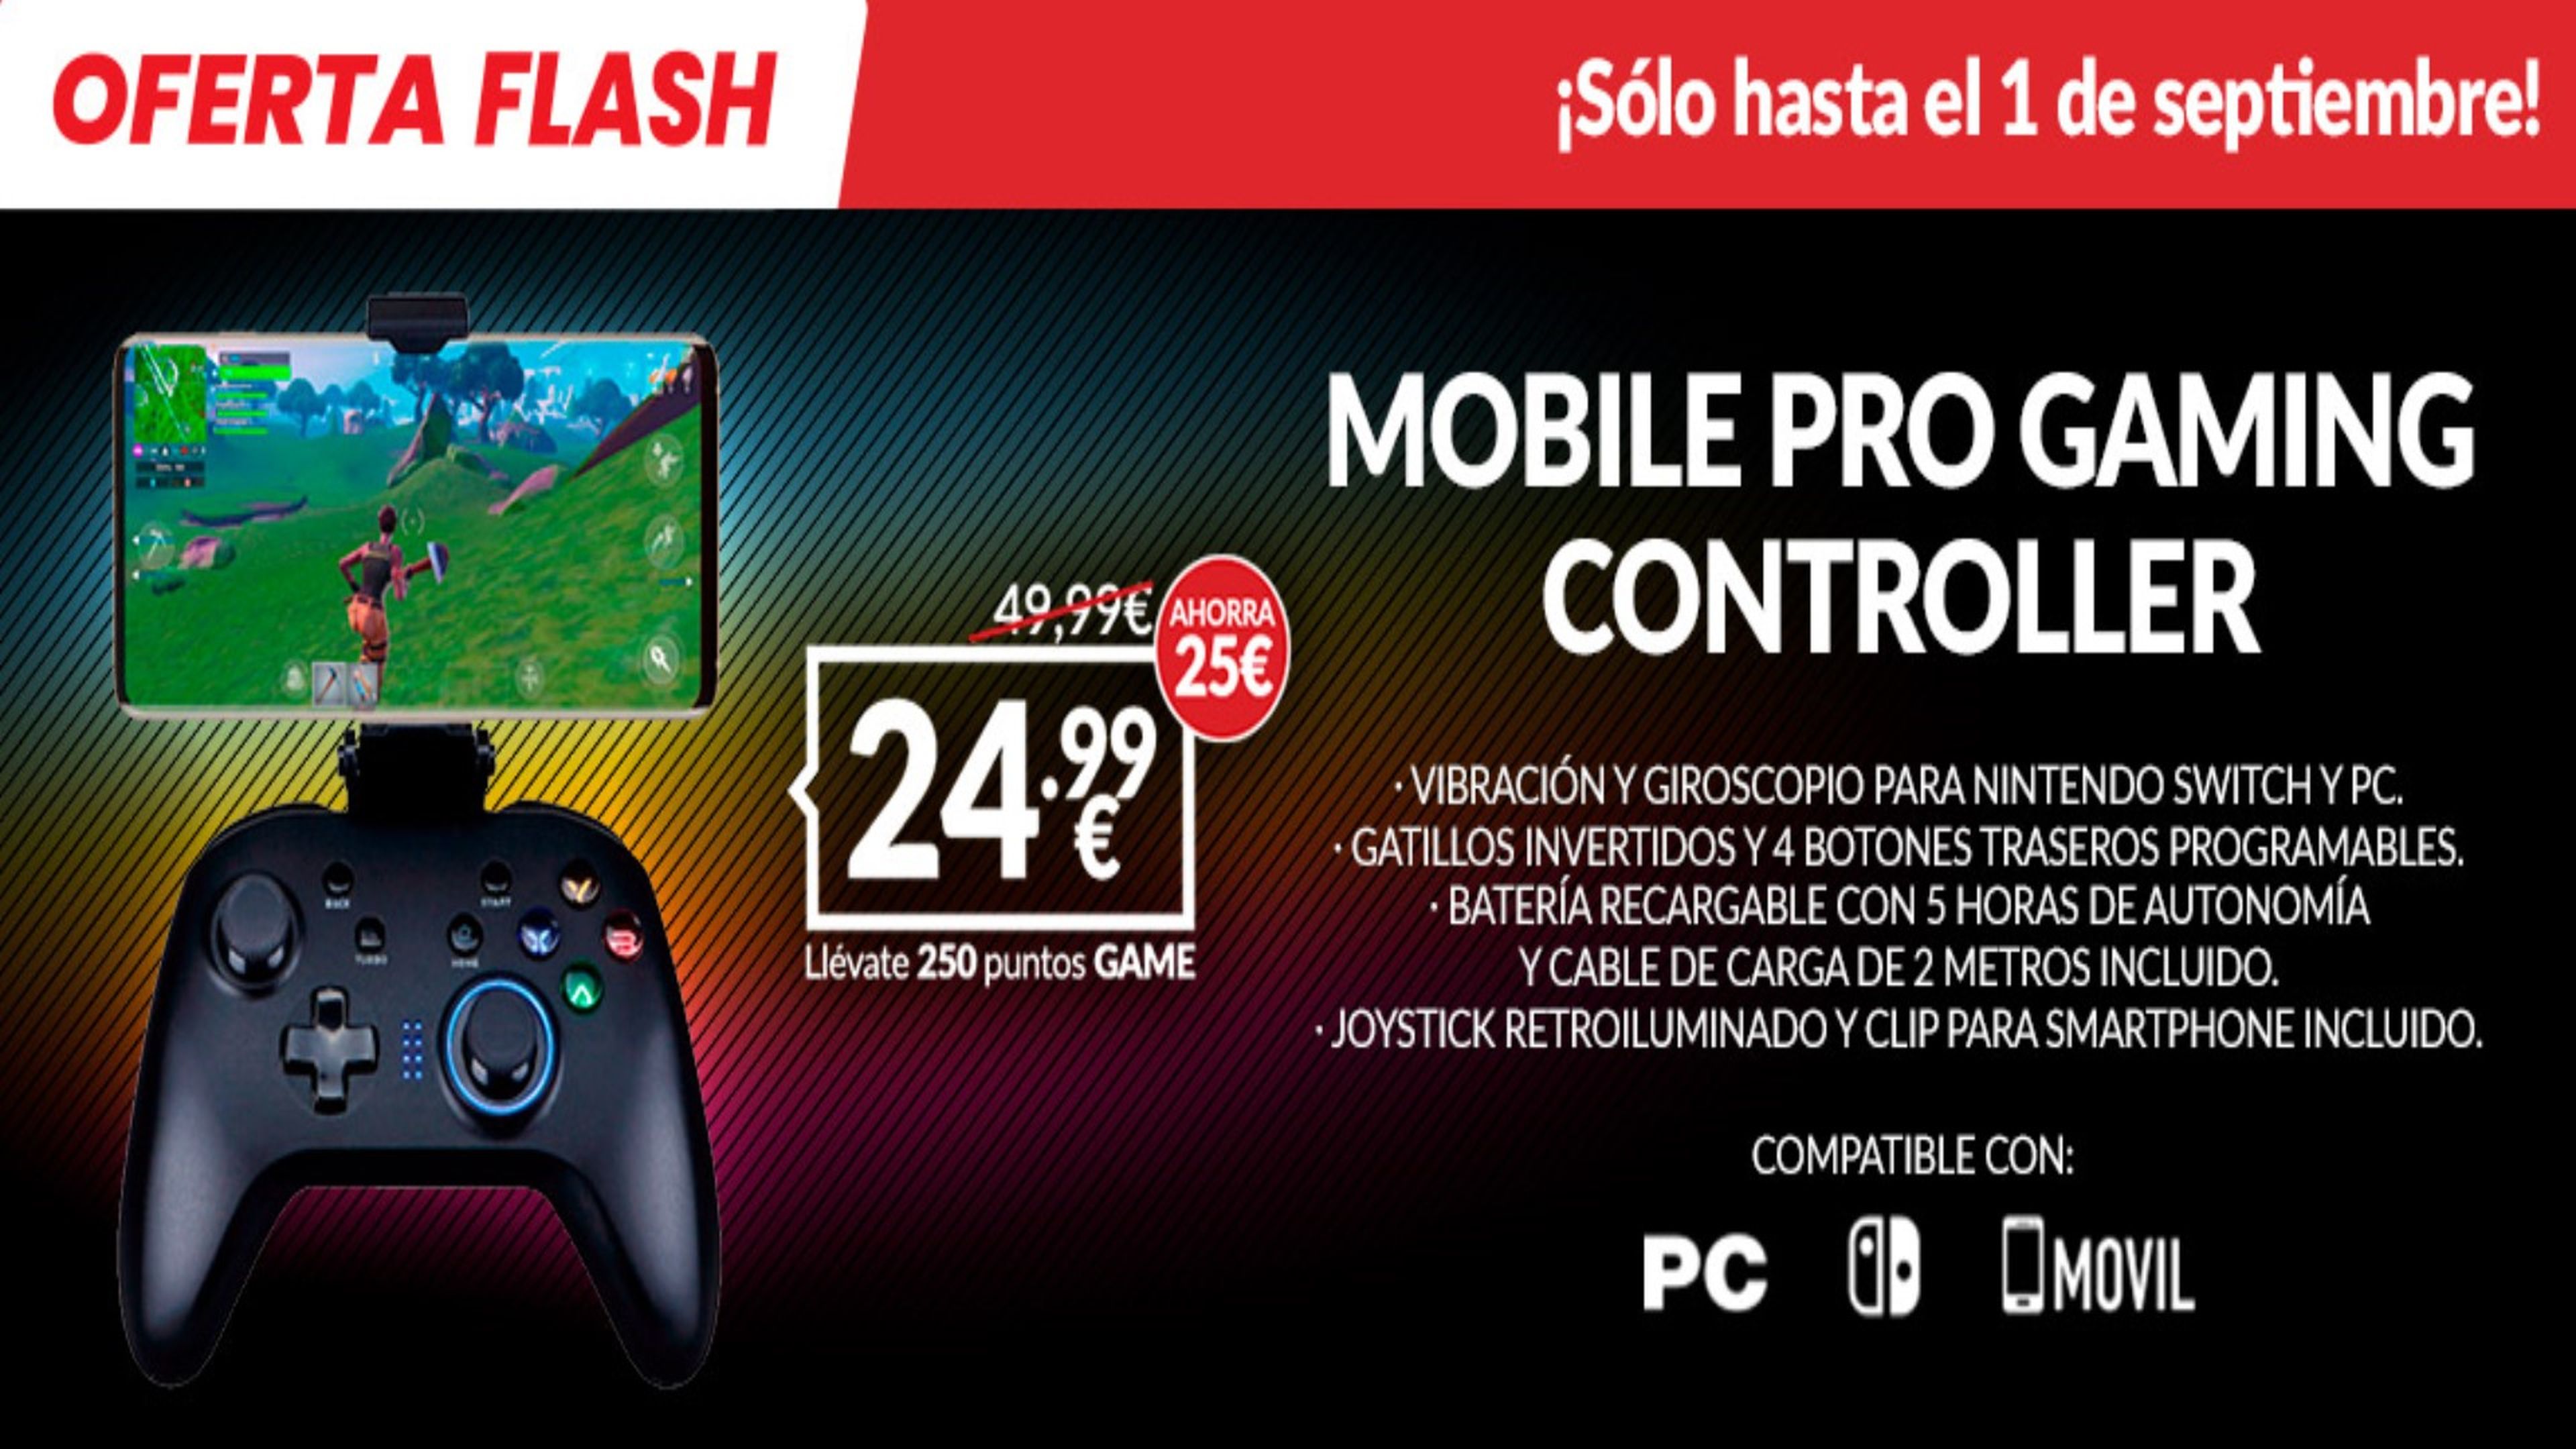 Oferta flash GAME del Mobile Pro Gaming Controller